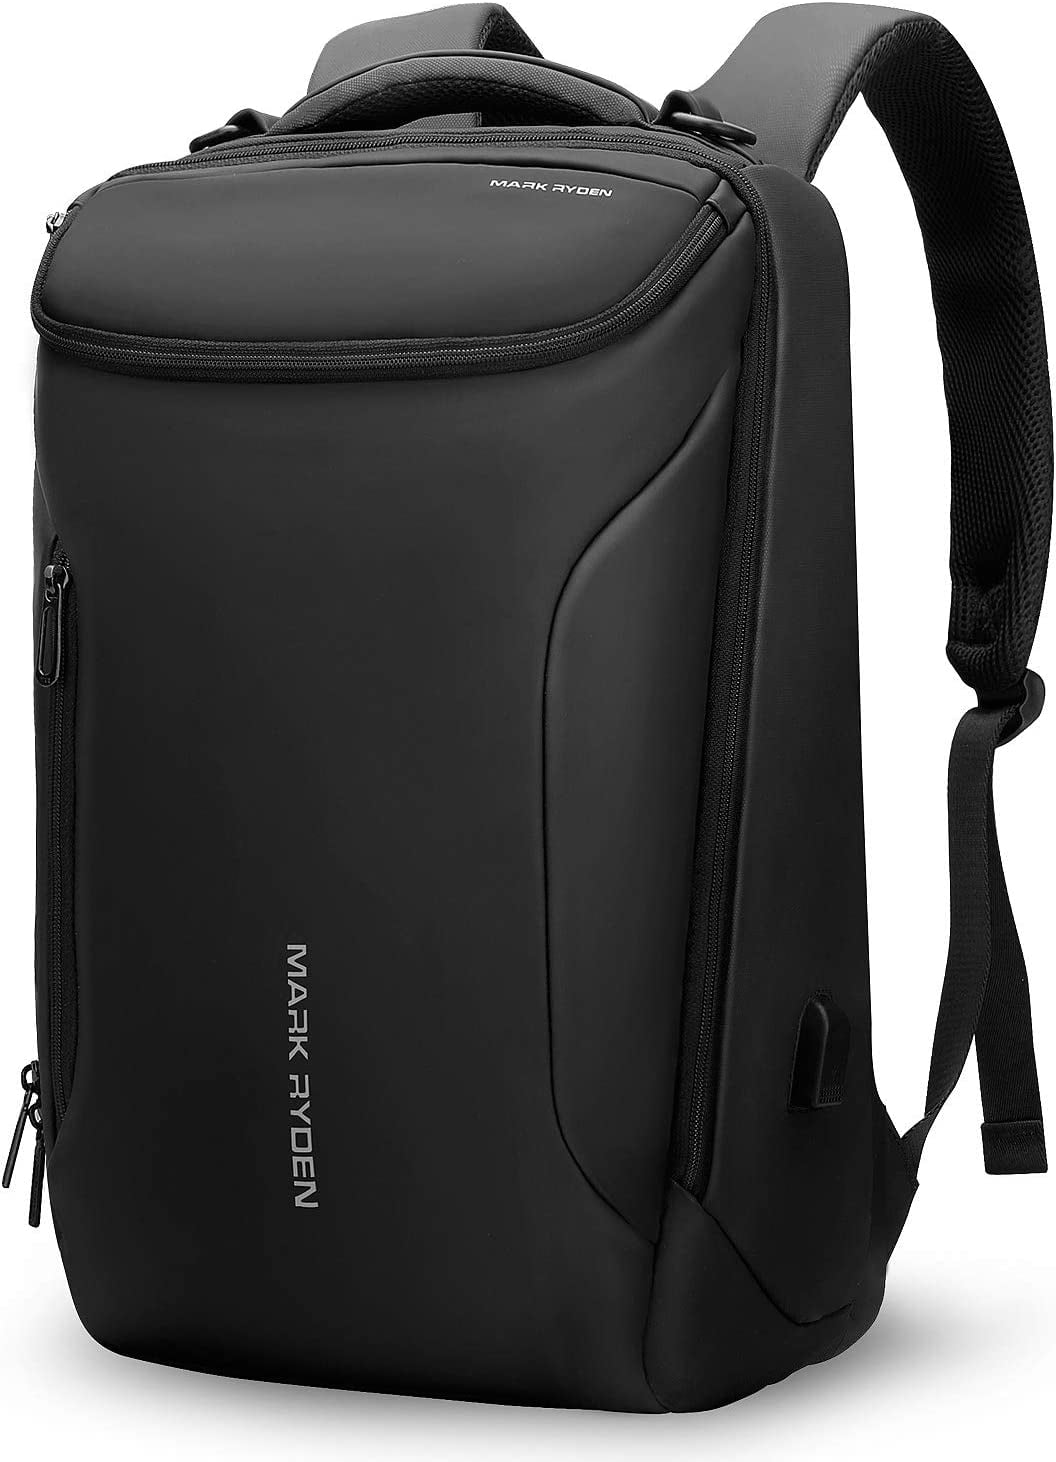 MARK RYDEN Business Backpack for Men, Waterproof High Tech Backpack ...